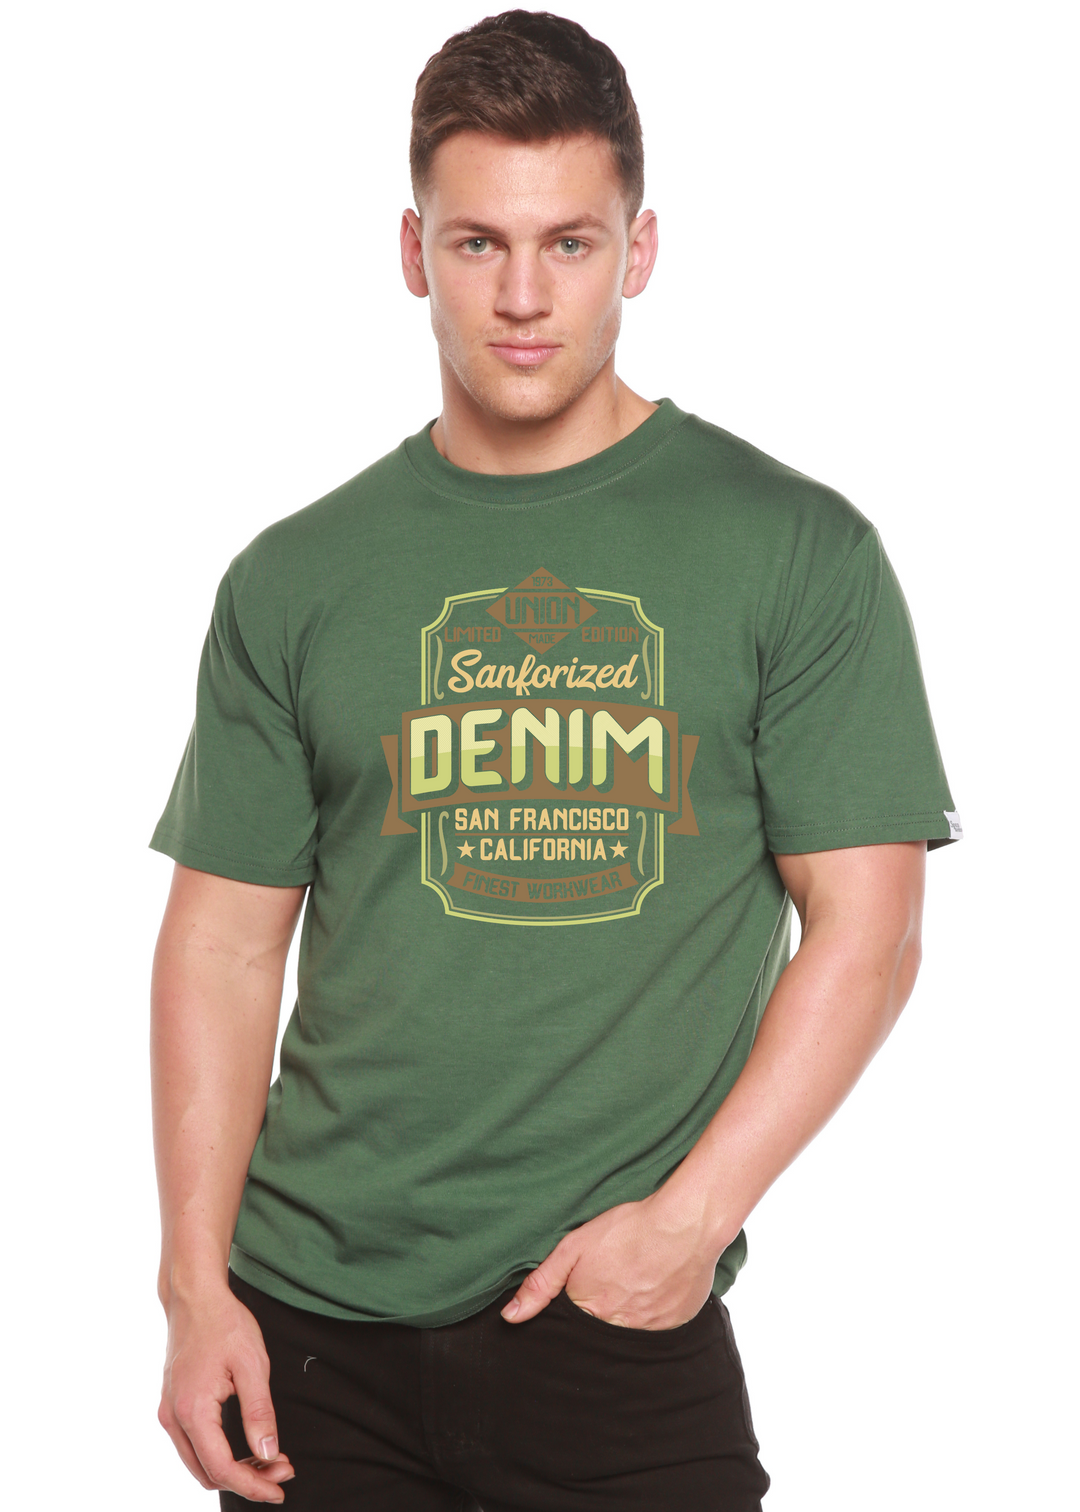 Sanforized Denim men's bamboo tshirt pine green